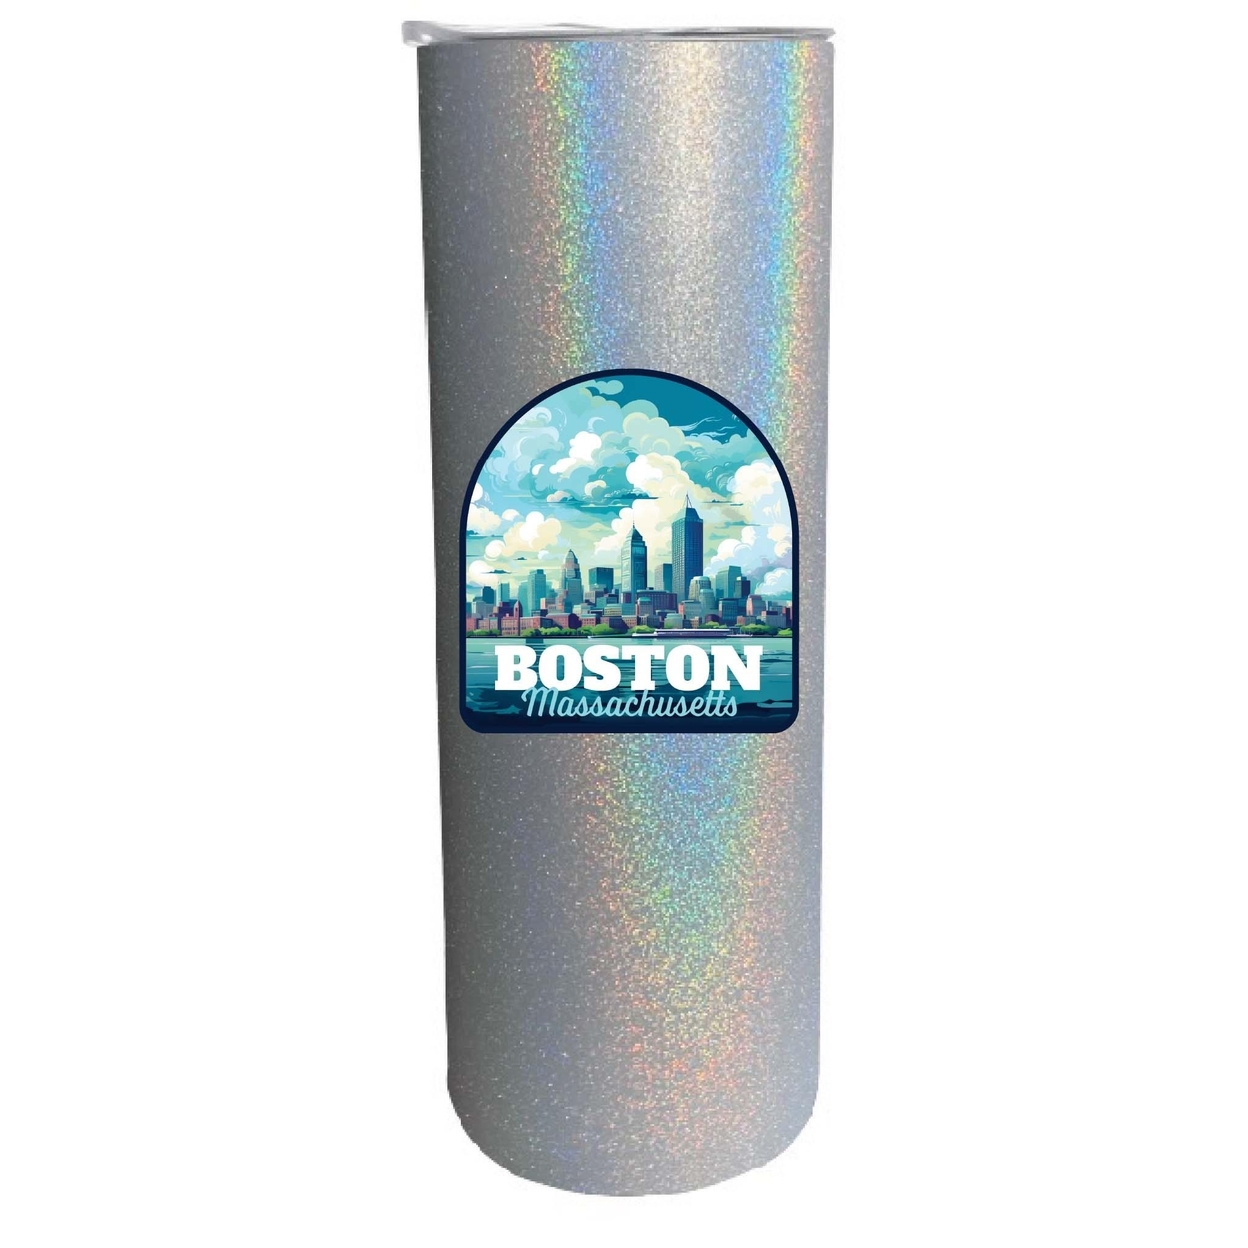 Boston Massachusetts A Souvenir 20 Oz Insulated Skinny Tumbler Glitter - Gray Glitter,,4-Pack